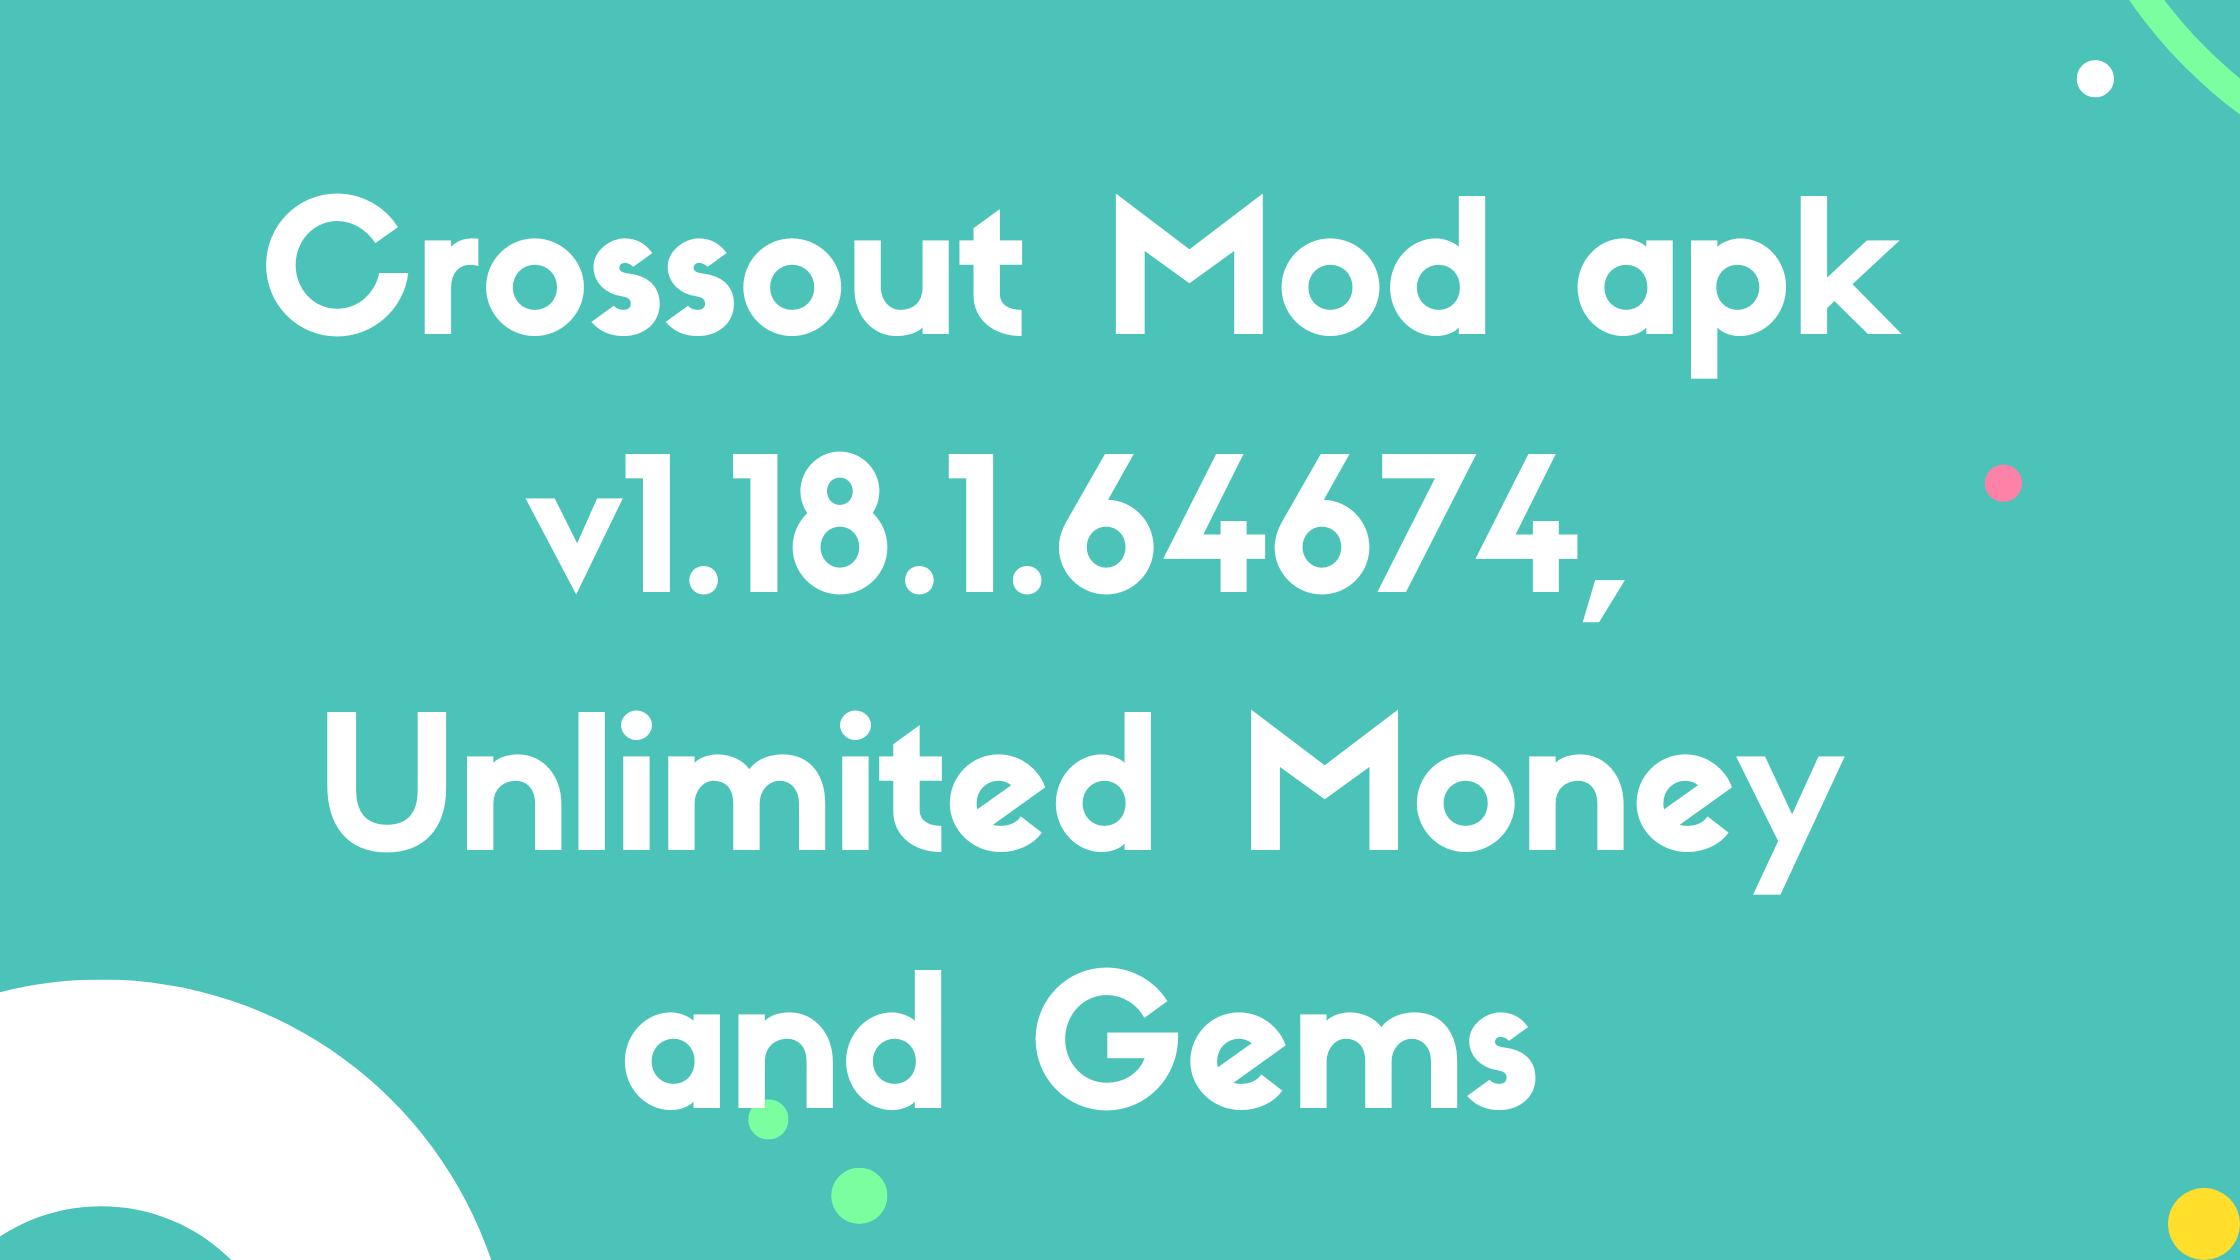 Crossout Mod apk v1.18.1.64674, Unlimited money and Gems